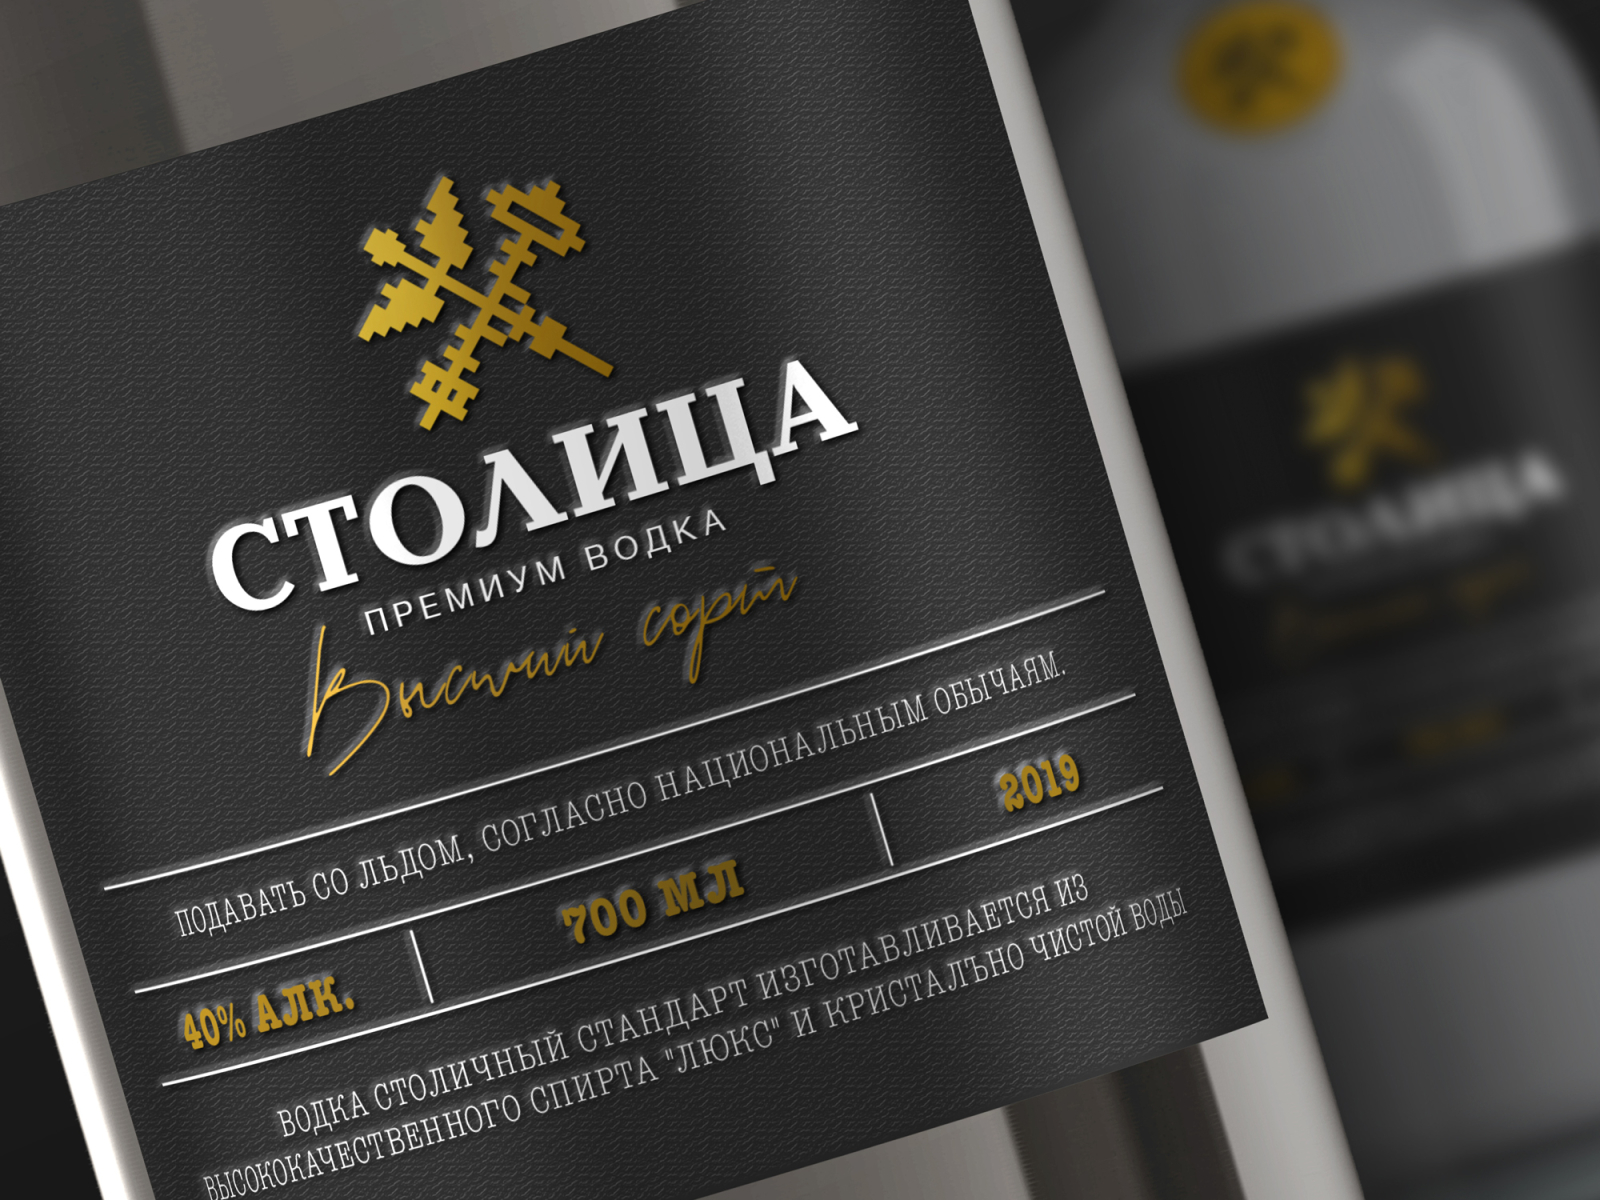 Premium quality Russian vodkas